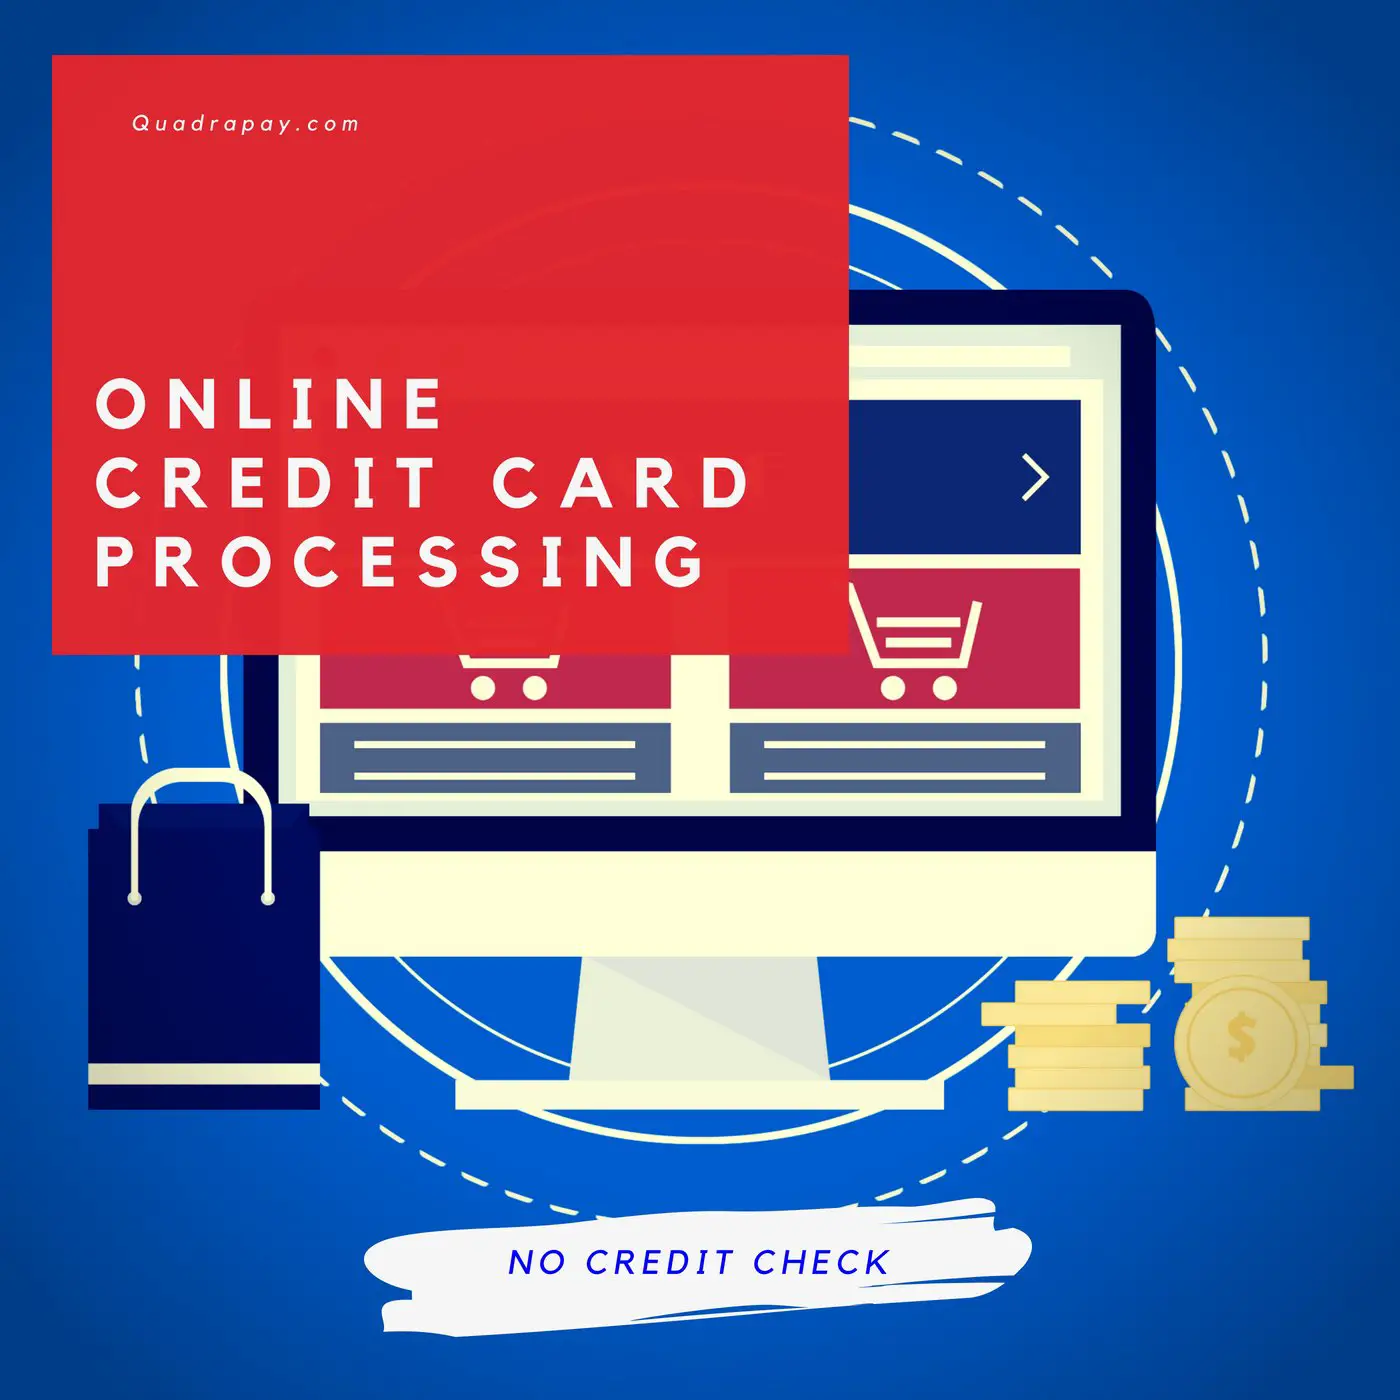 Online Credit Card Processing No Credit Check